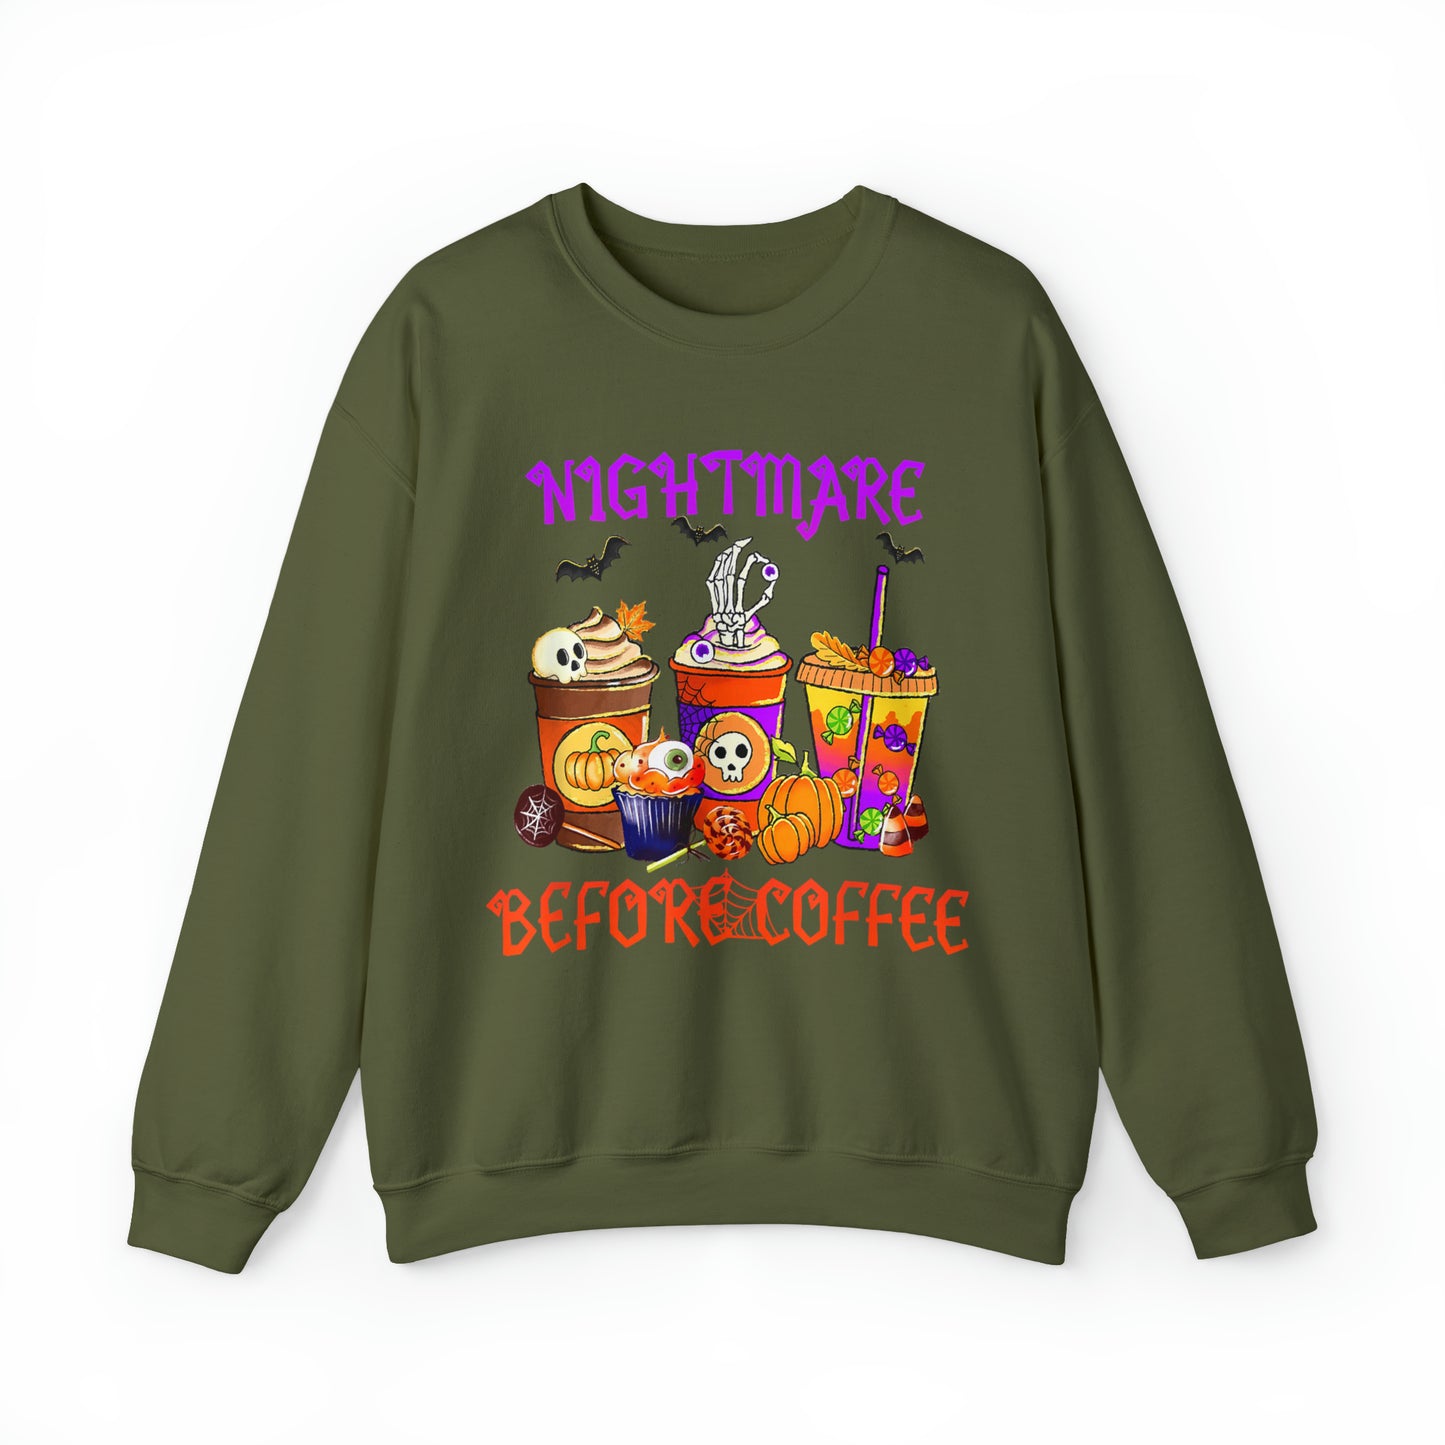 Nightmare before Coffee Crewneck Sweatshirt